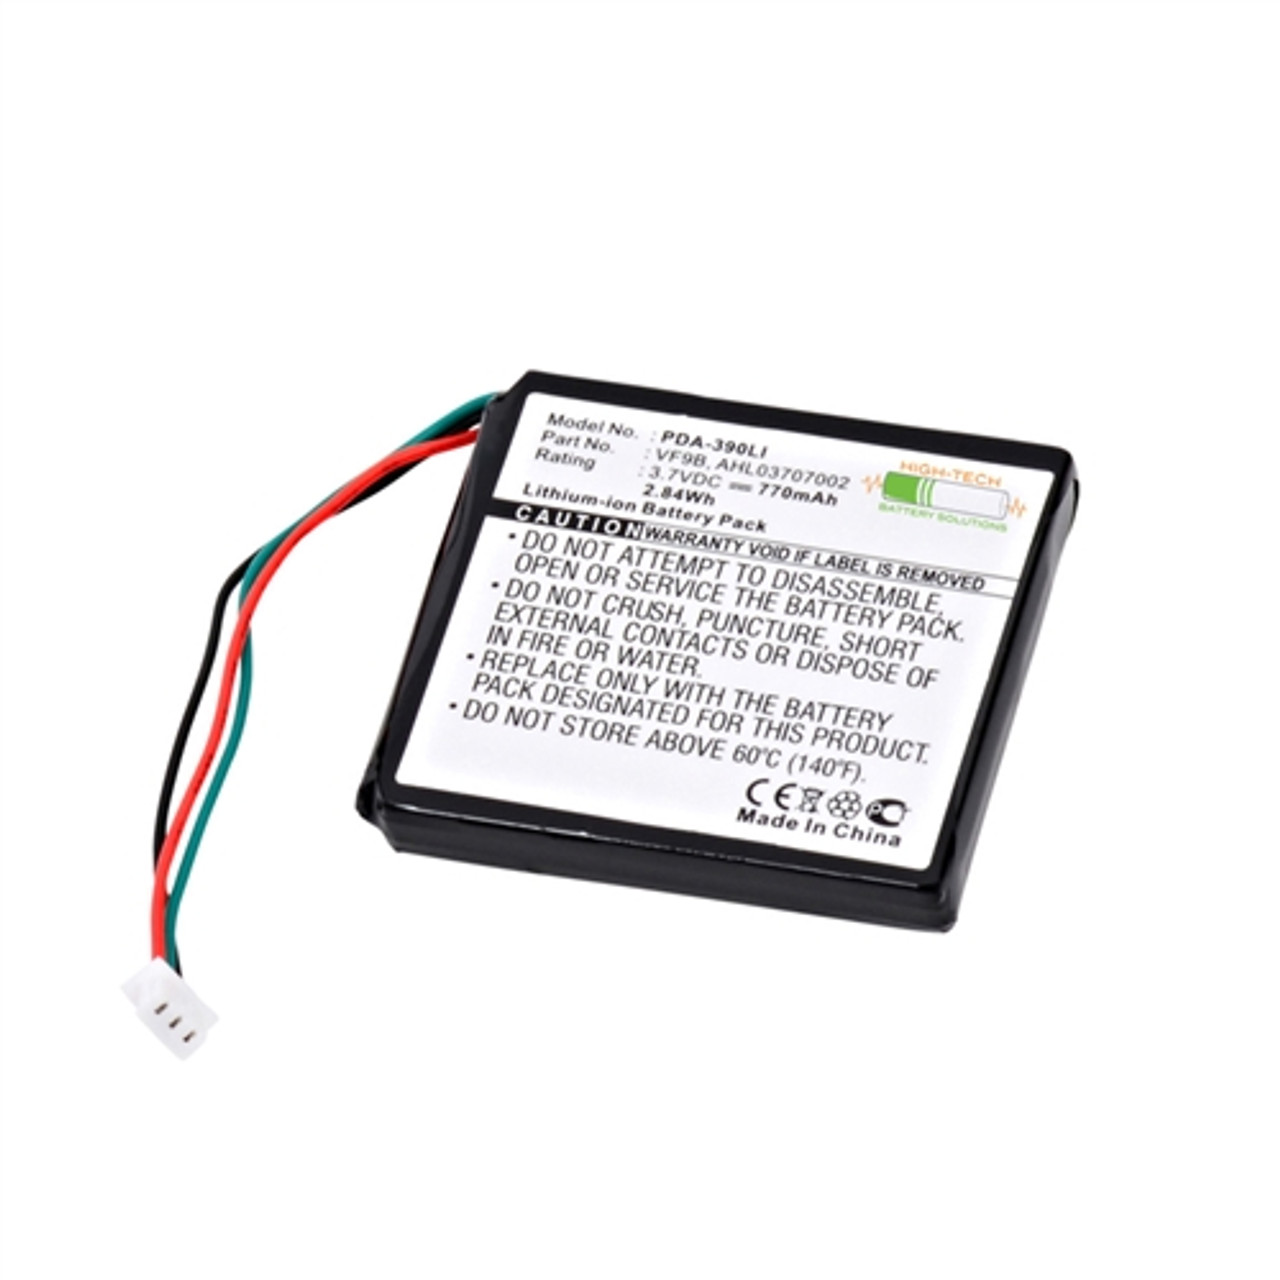 TomTom - Start GPS Navigator Battery Replacement